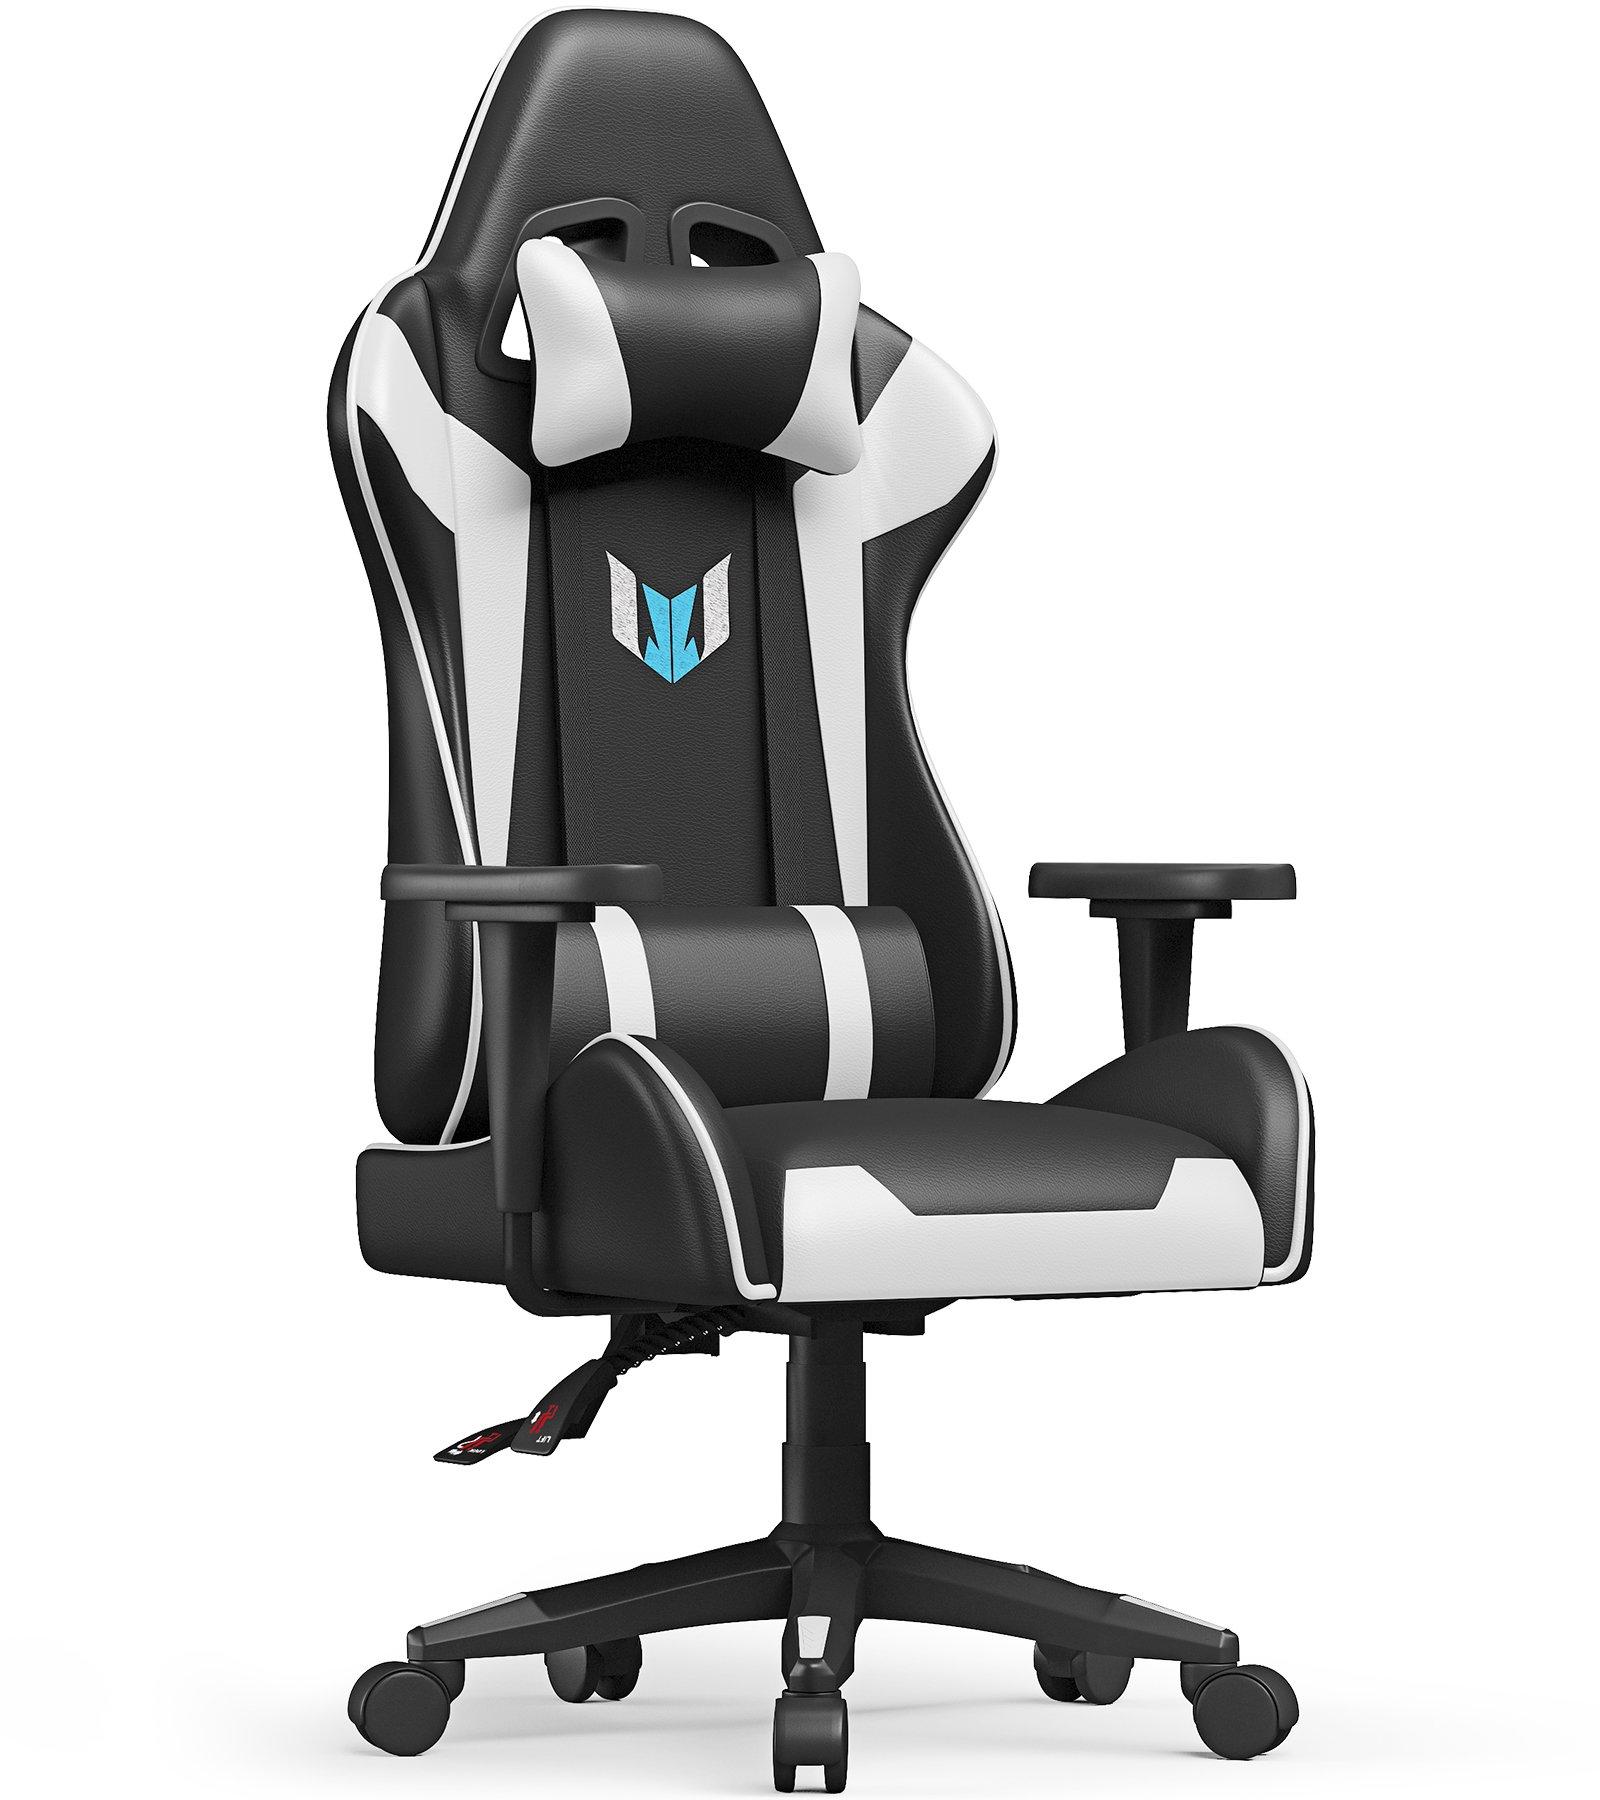 Ergonomic Gaming Chair with Lumbar Cushion&Headrest&Fixed Armrest 155 Degree